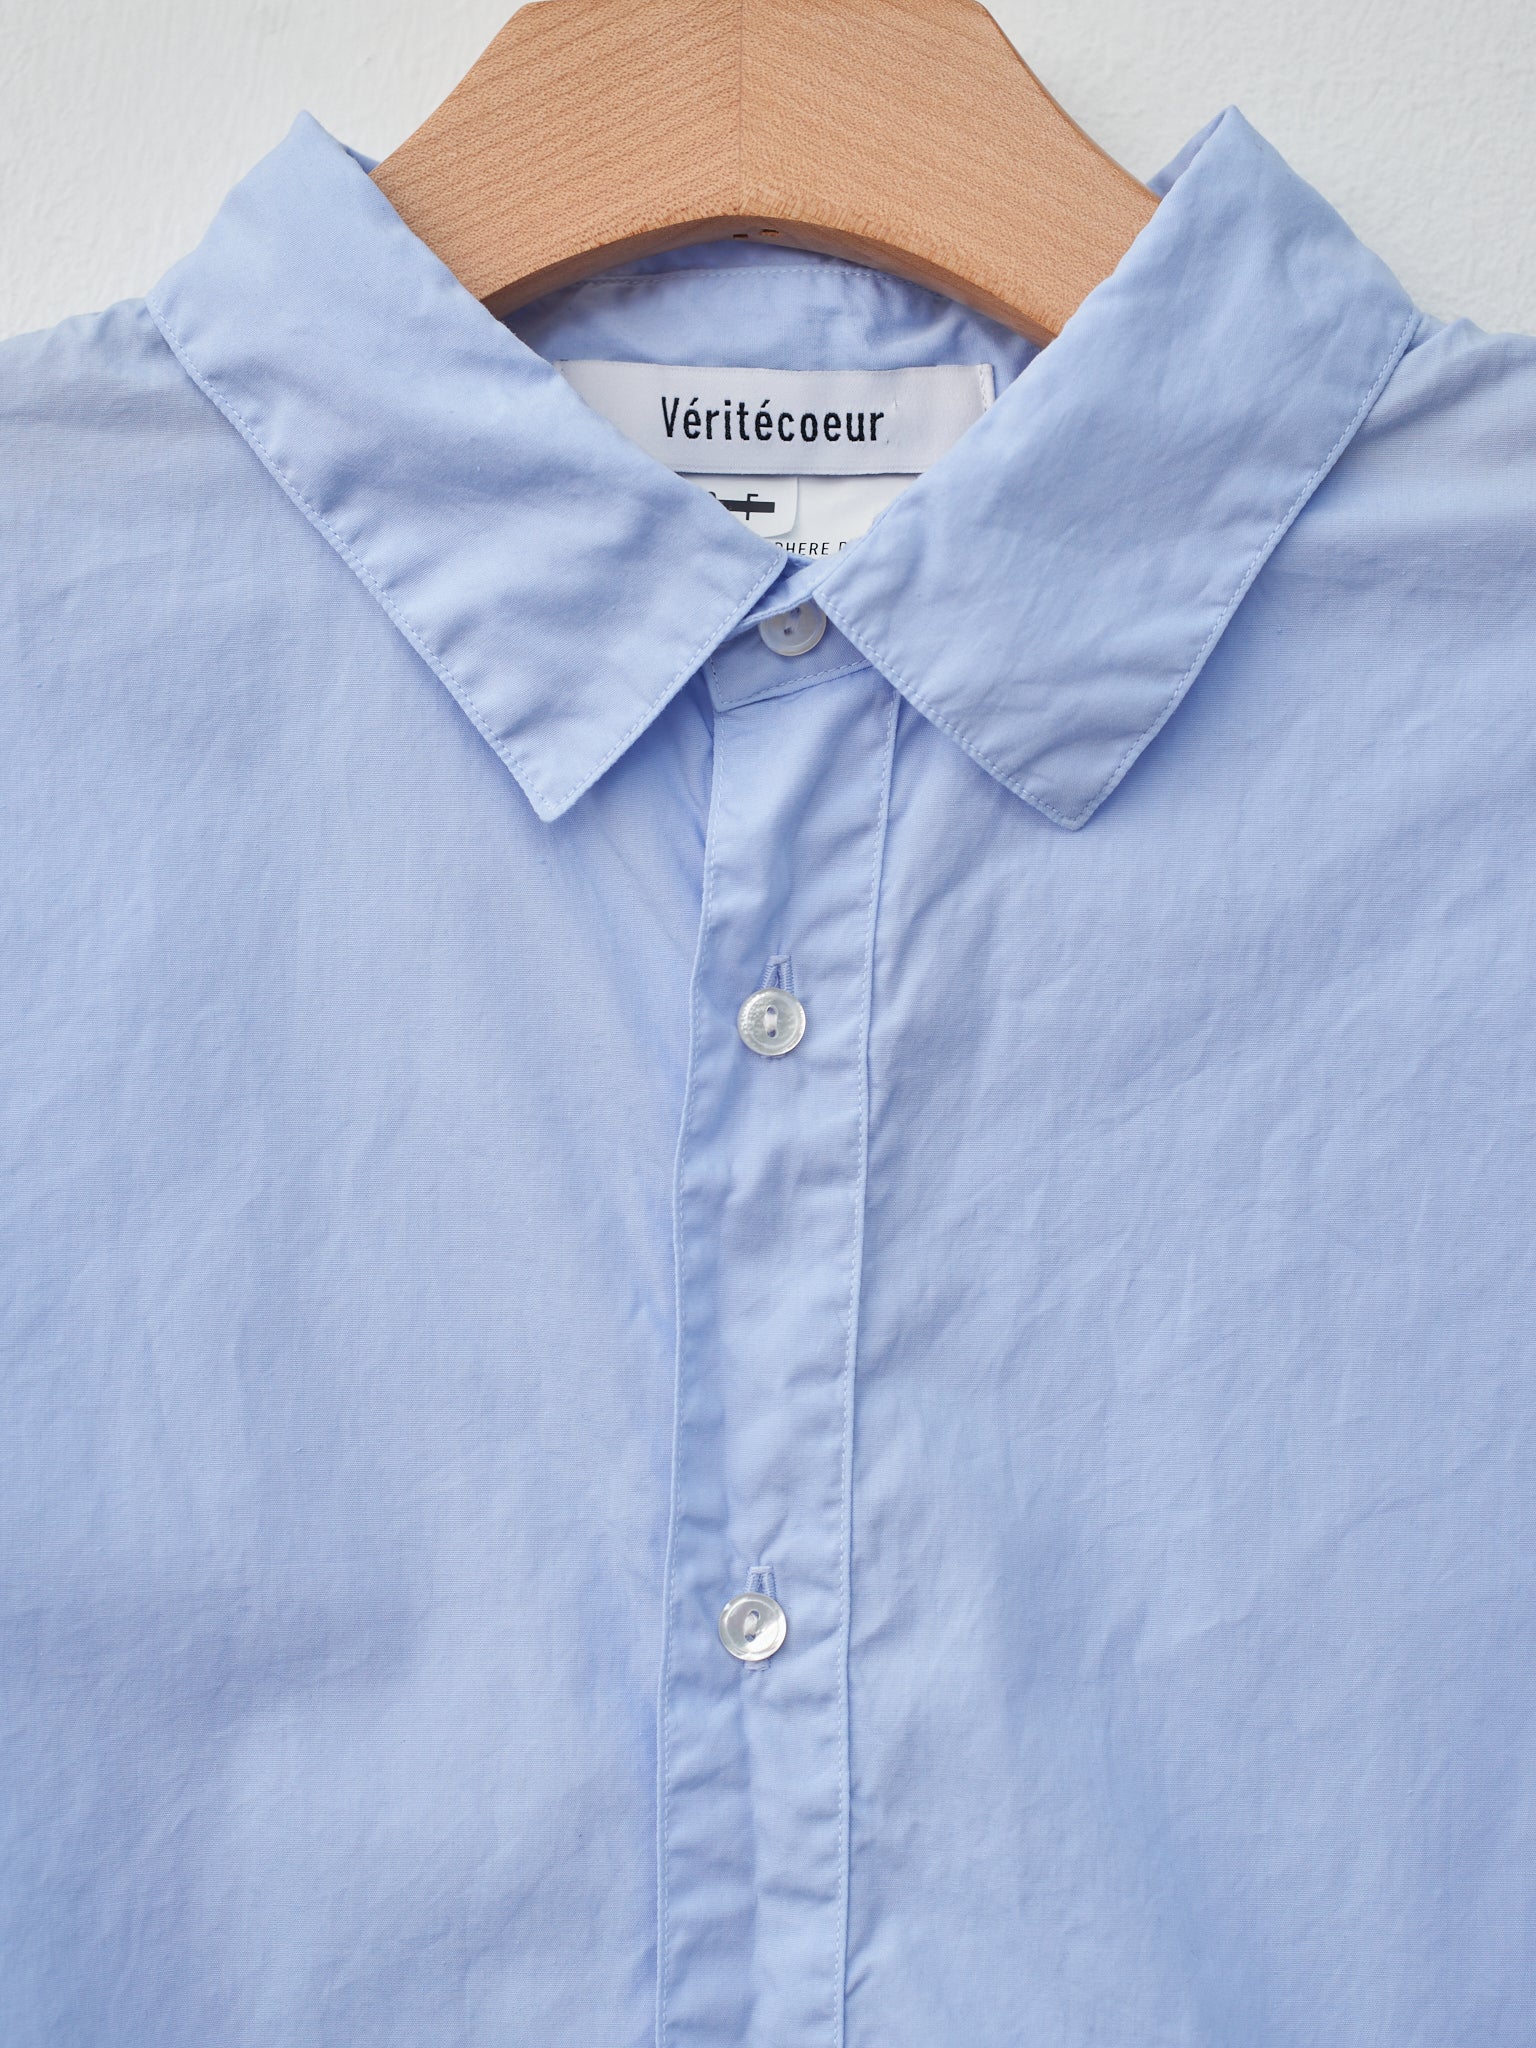 Namu Shop - Veritecoeur Half Sleeve Big Shirt - Sax Blue